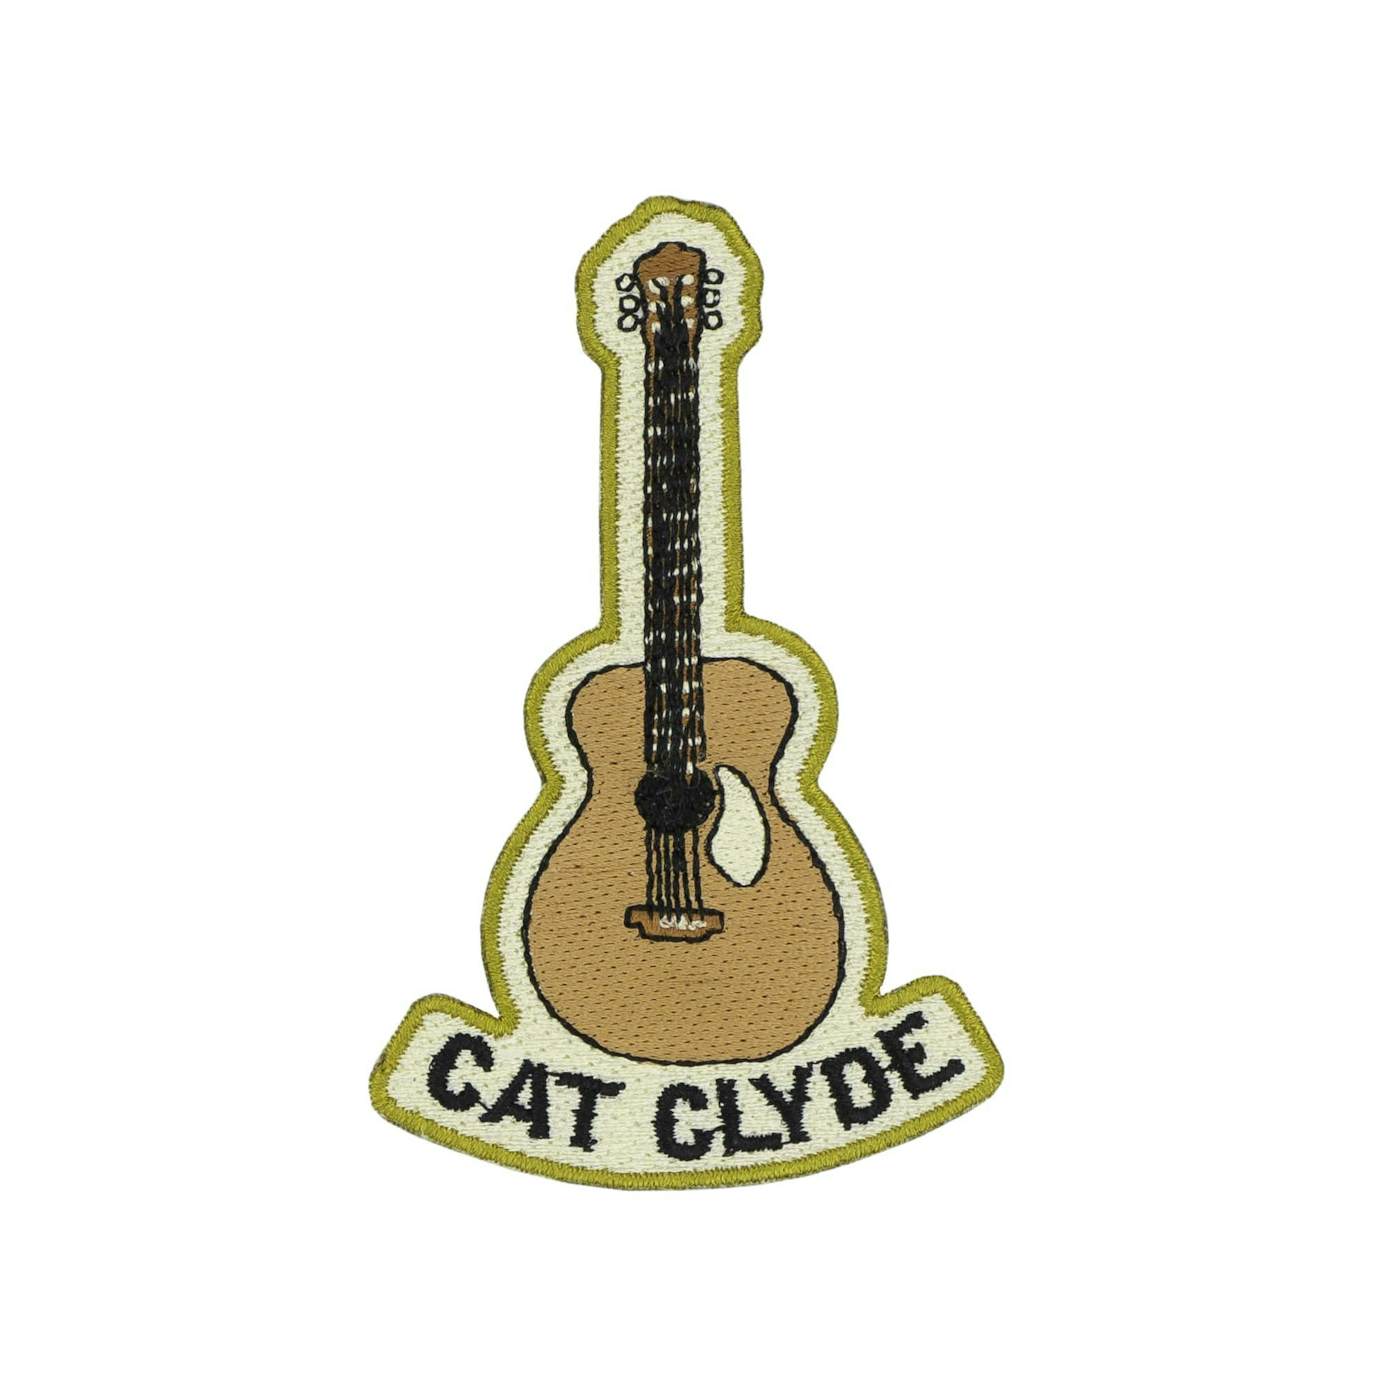 Cat Clyde Guitar Patch